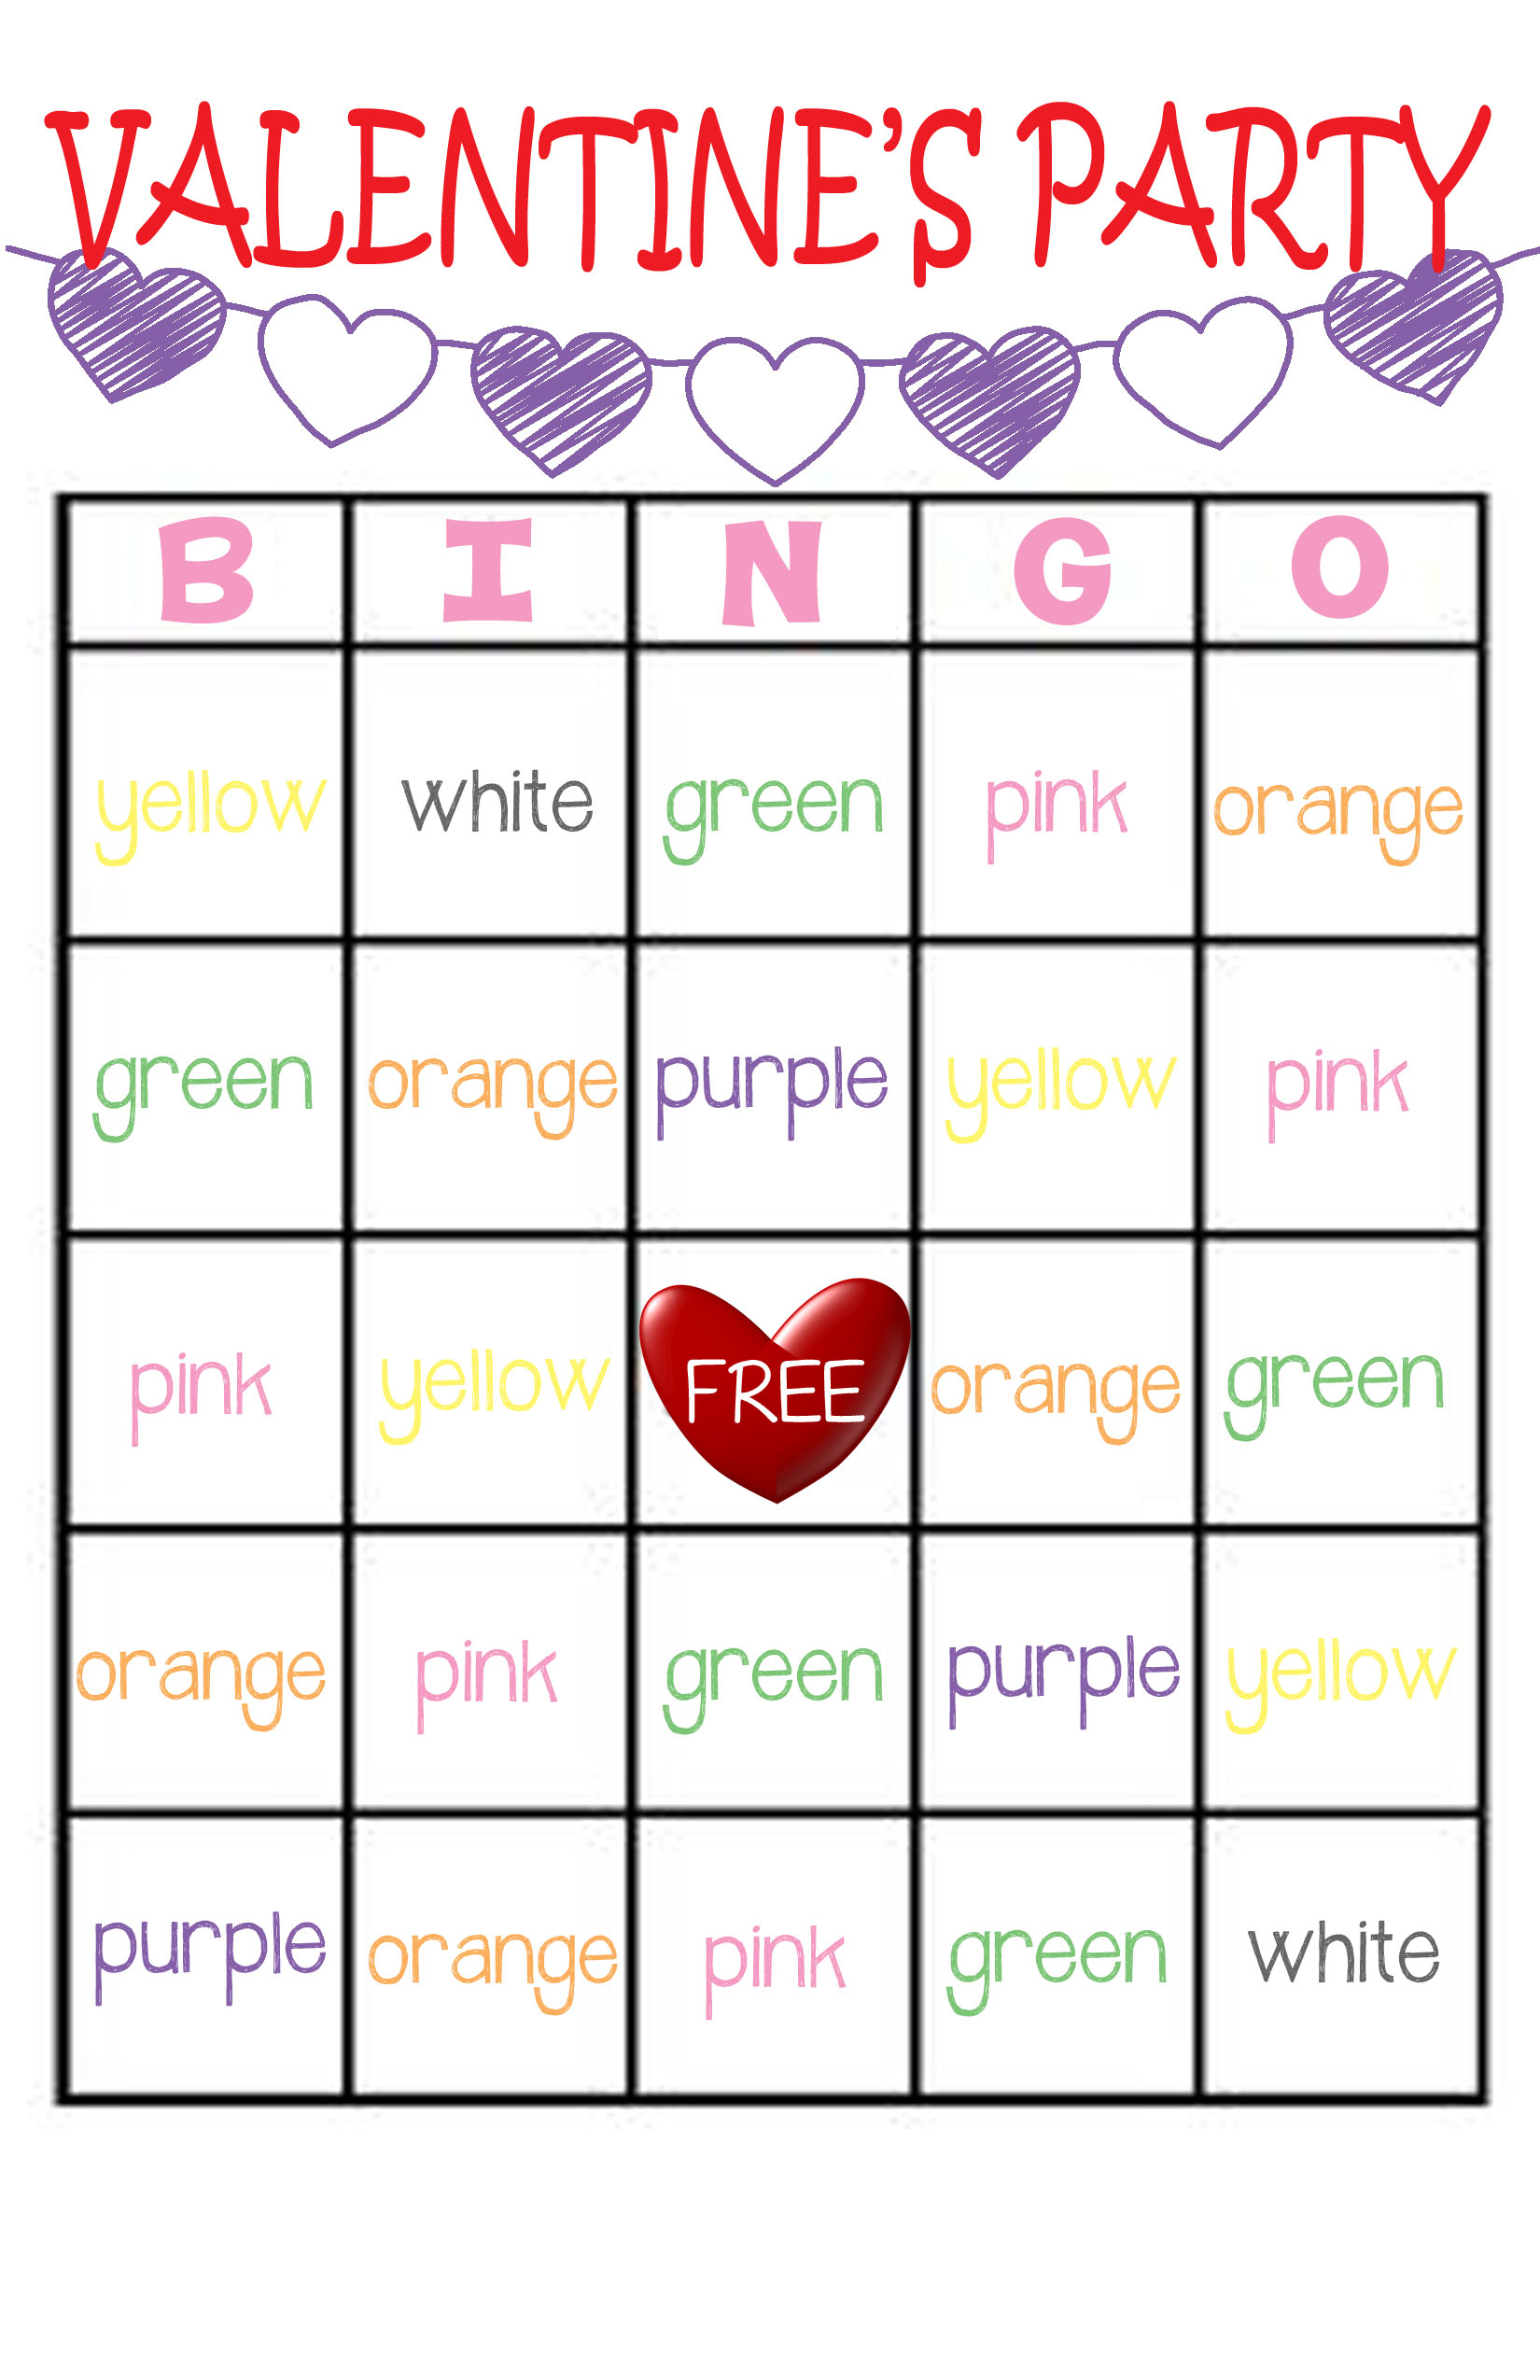 Classroom Valentine's Party Bingo Game FREE Printable • jeni ro designs